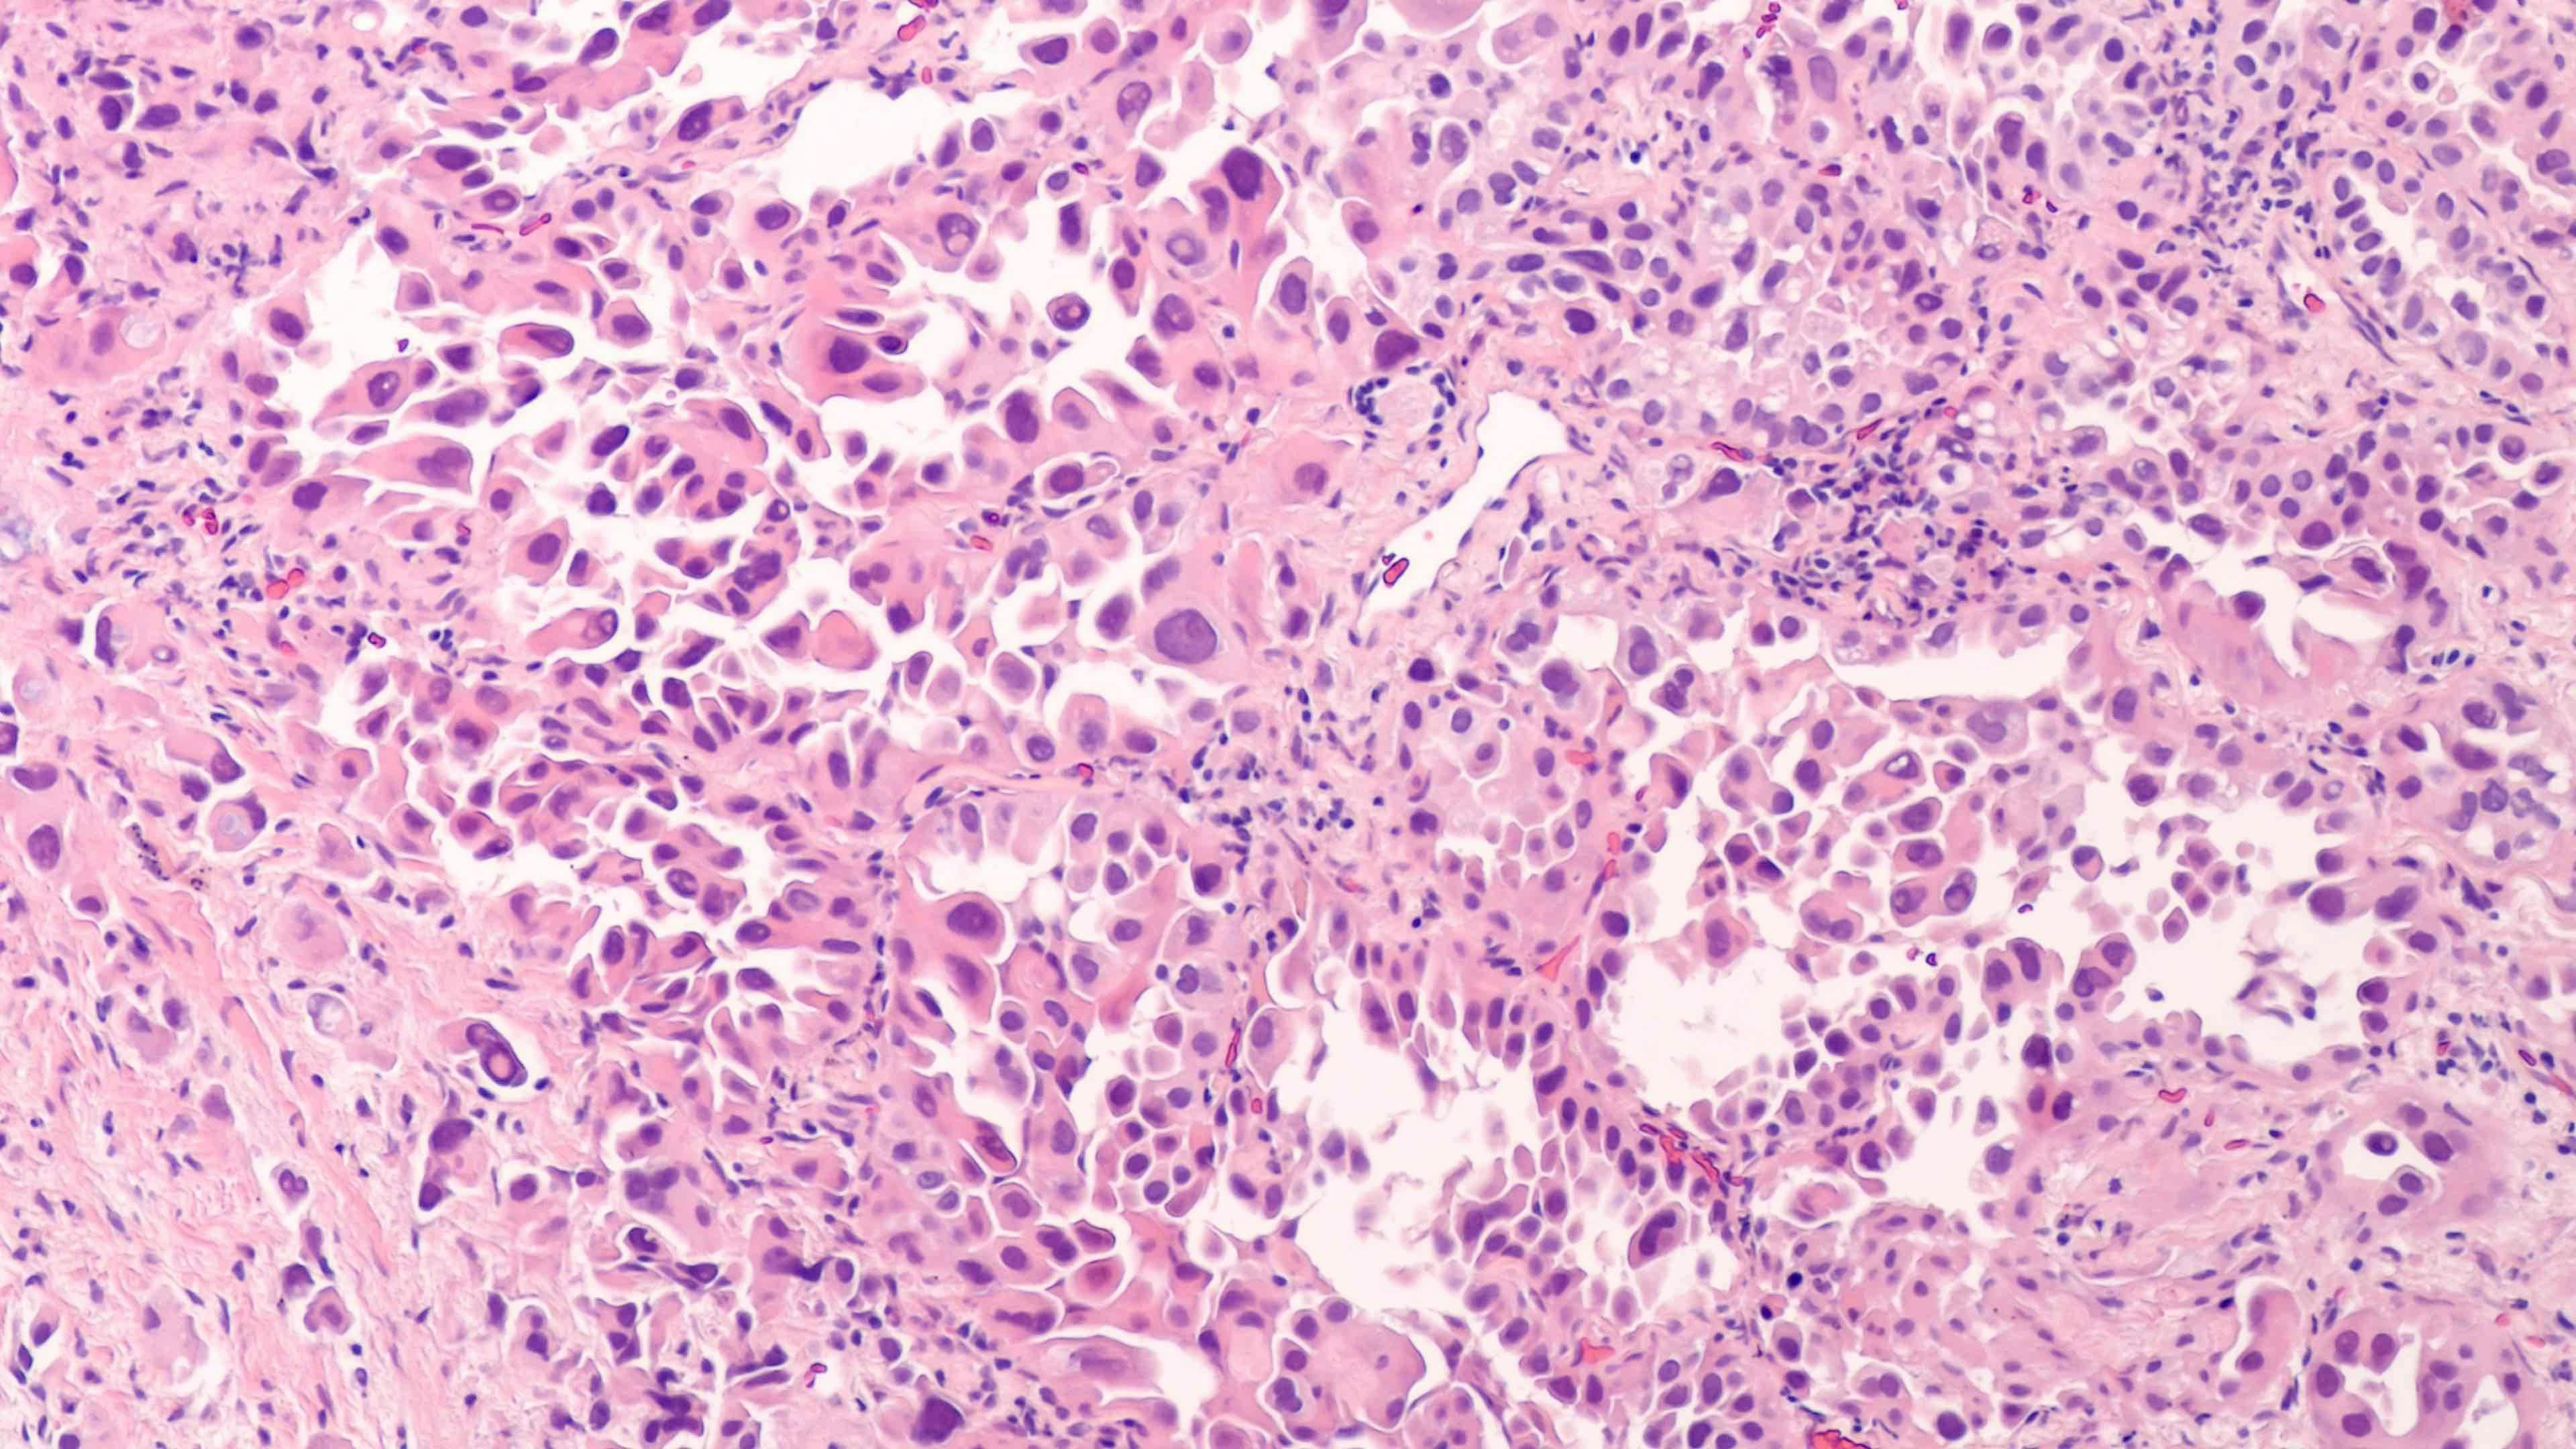 Lung cancer cells | Image credit: David A Litman - stock.adobe.com